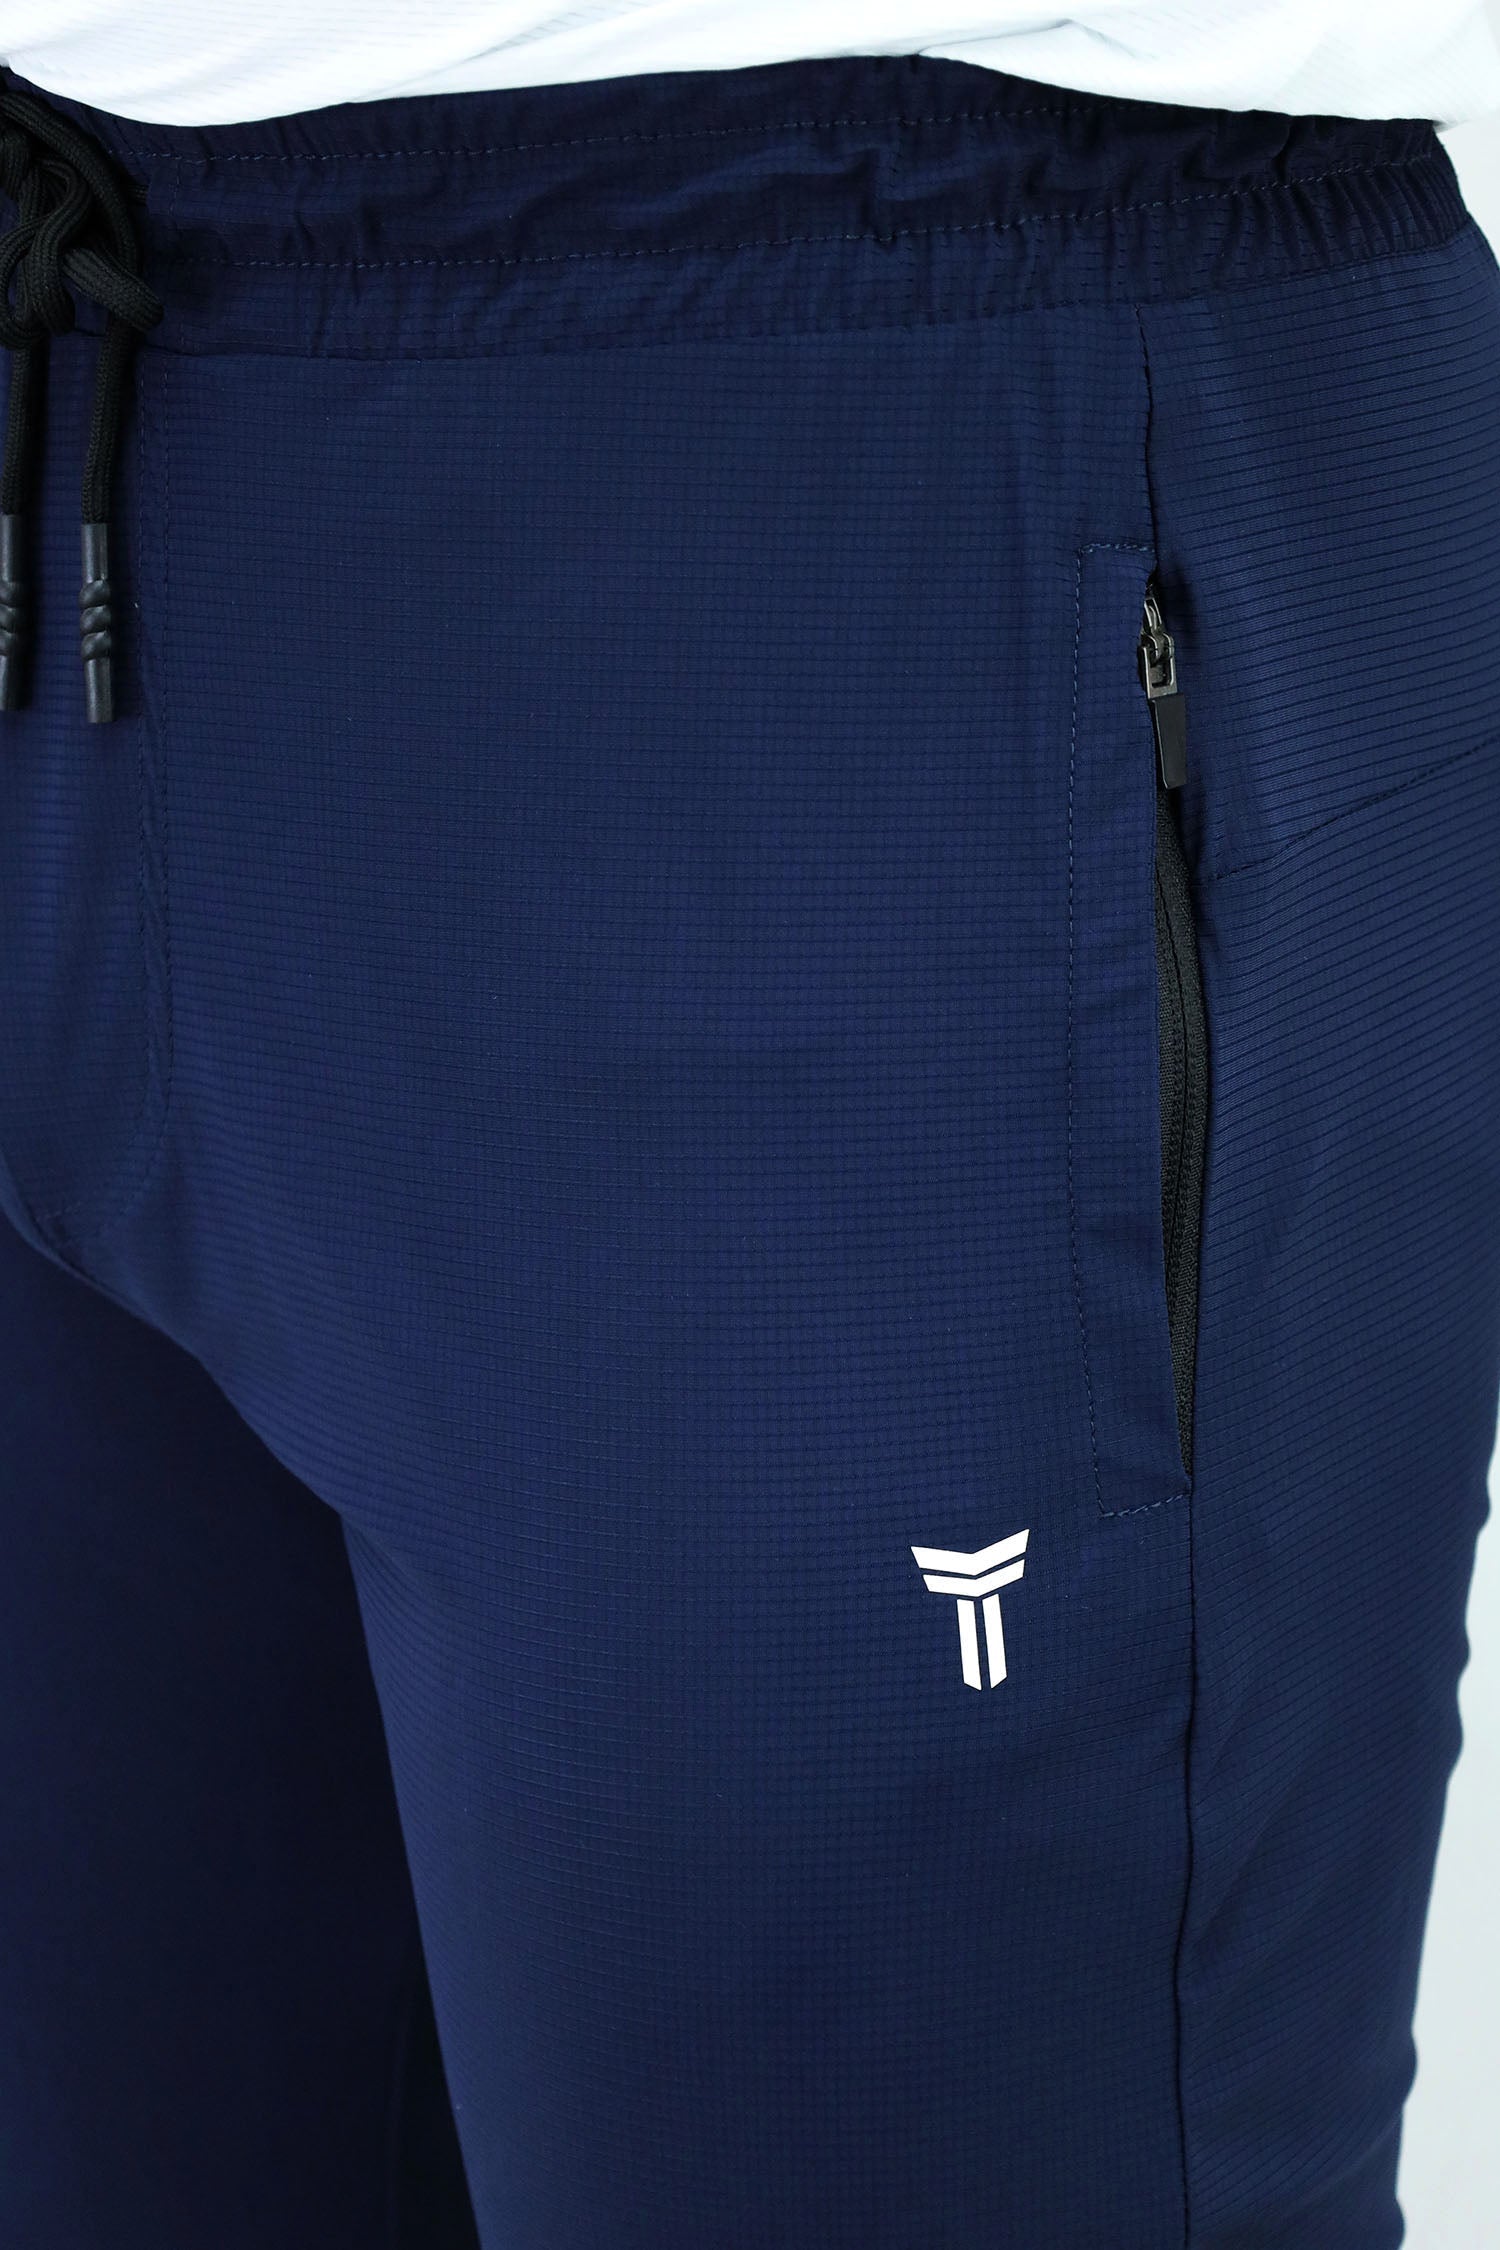 Turbo Self Texture Men Training Trouser In Navy Blue